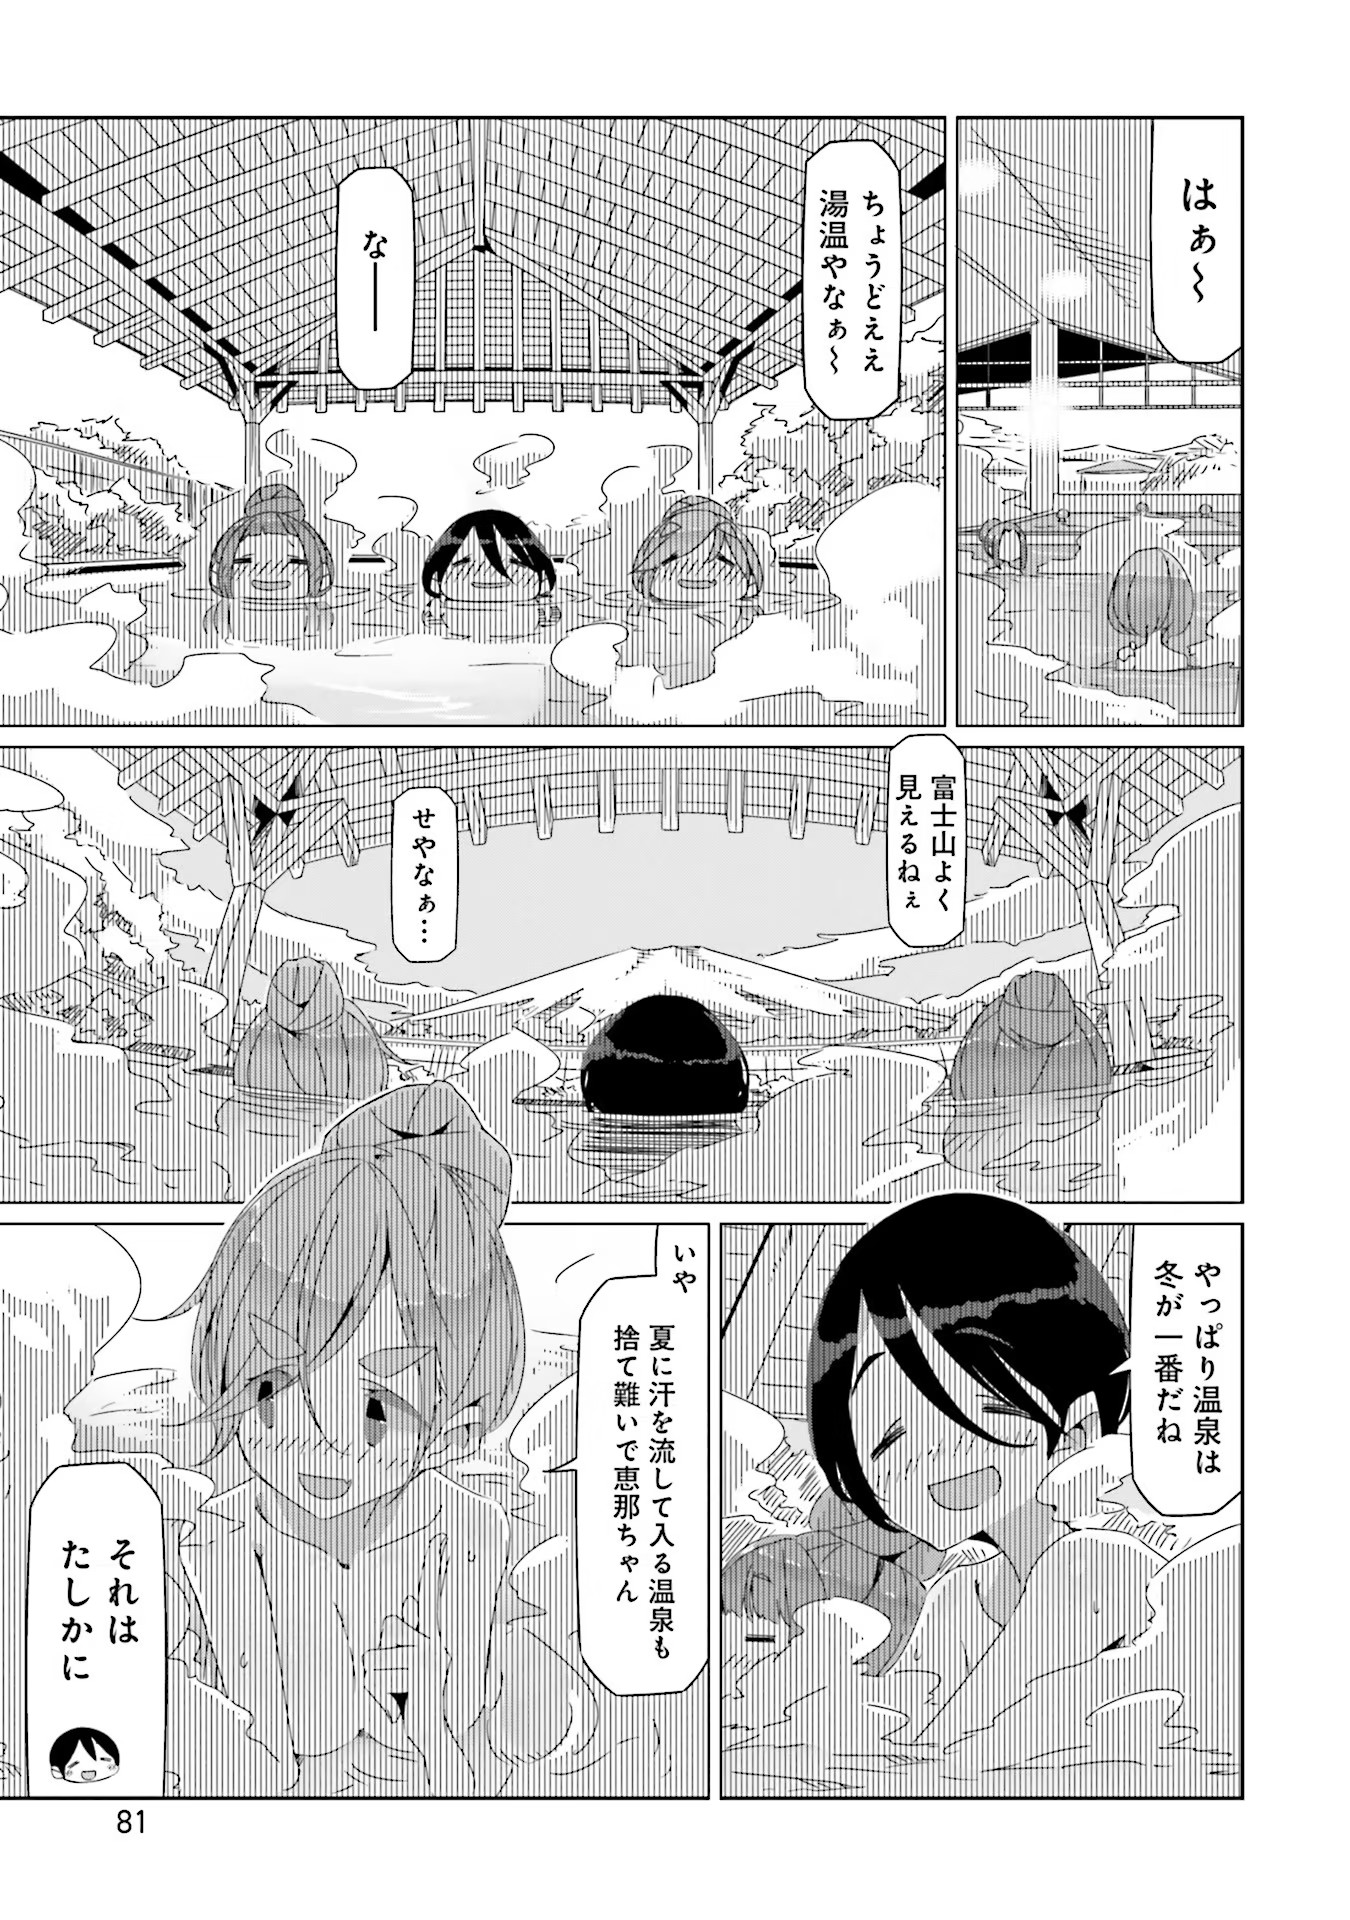 Yuru Camp - Chapter 32 - Page 1